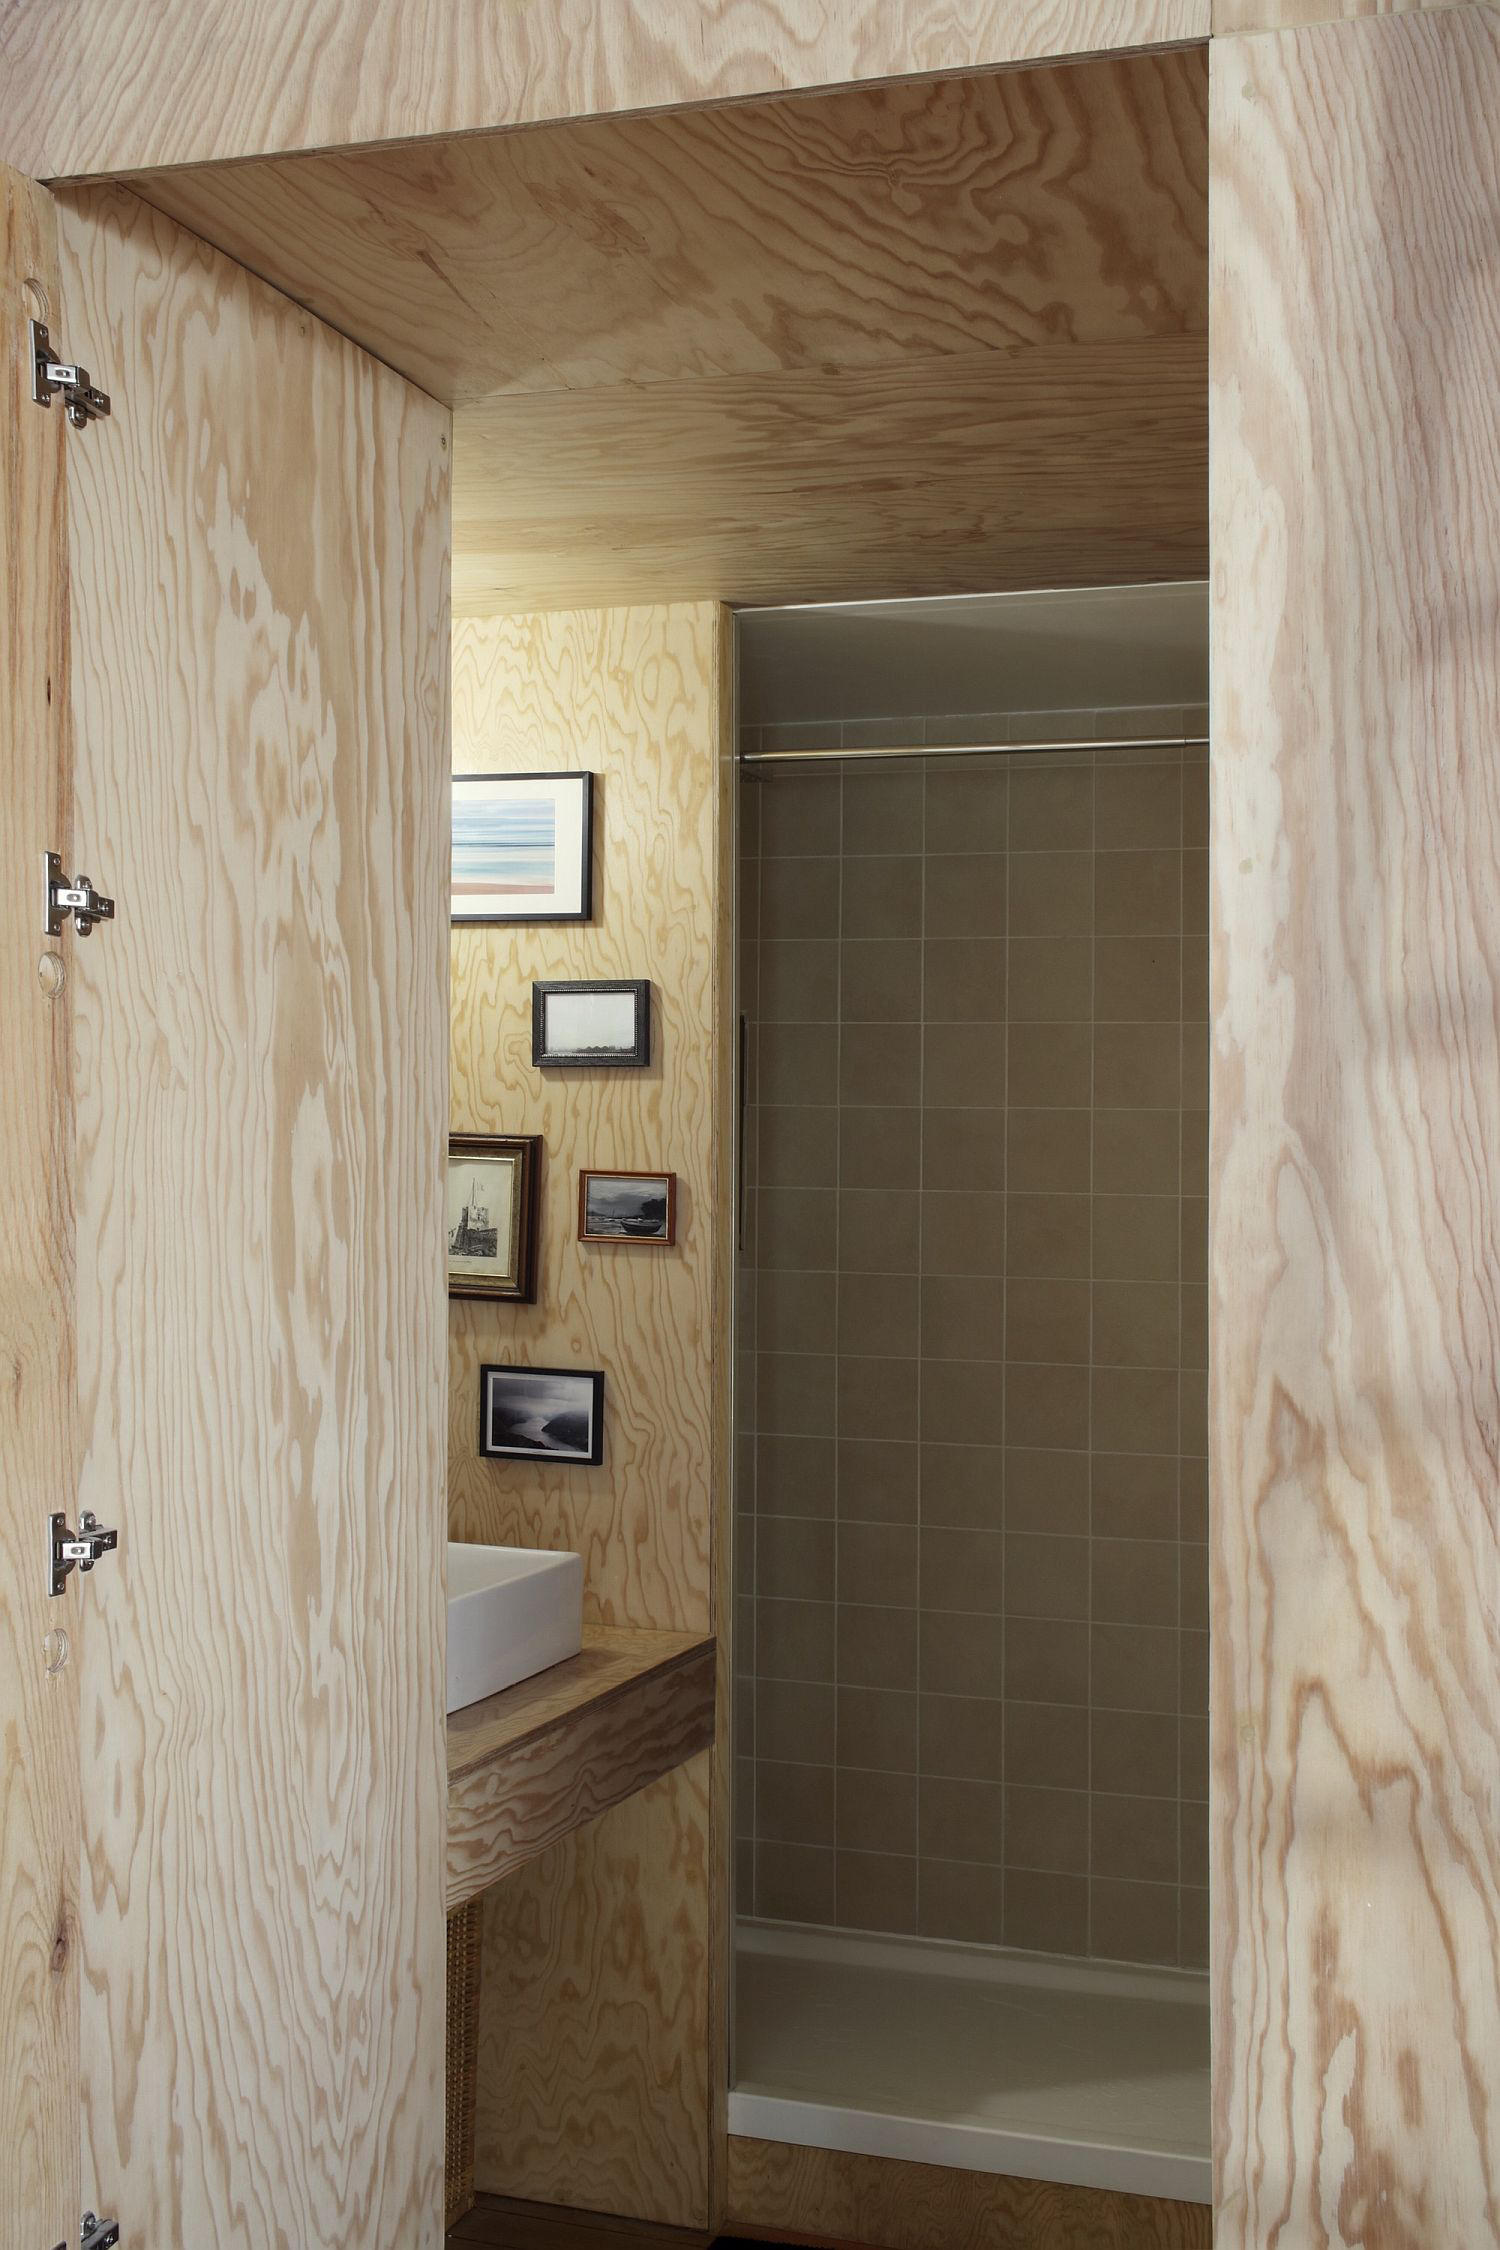 tiled-bathroom-brings-gray-to-the-interior-15747864699582038854519.jpg